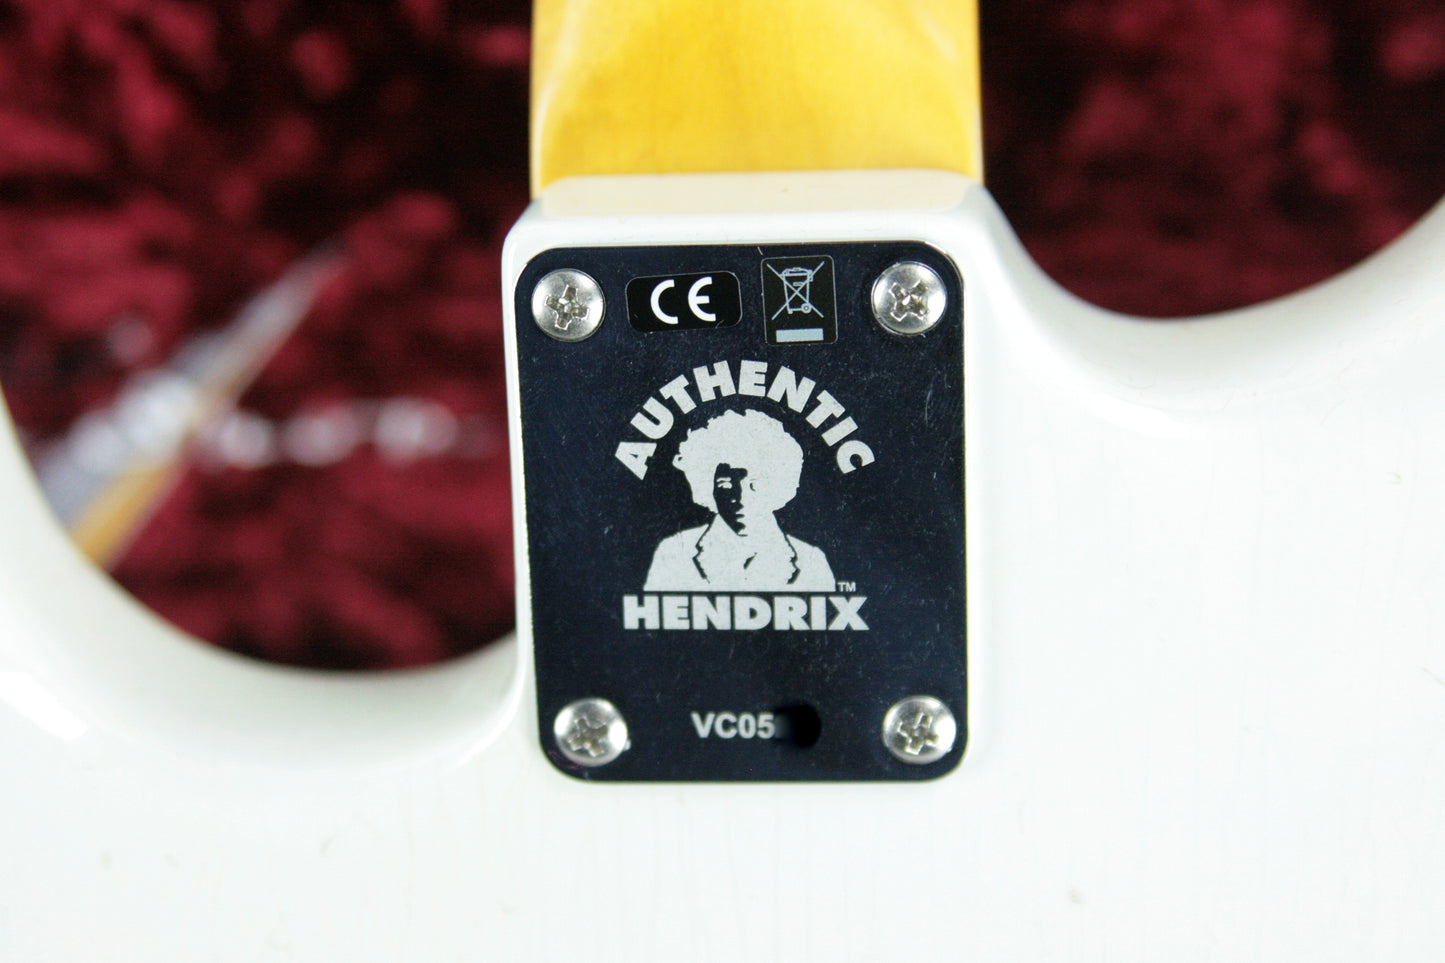 2018 Fender Custom Shop Jimi Hendrix Voodoo Child Stratocaster Journeyman Relic White Strat Maple Cap Neck